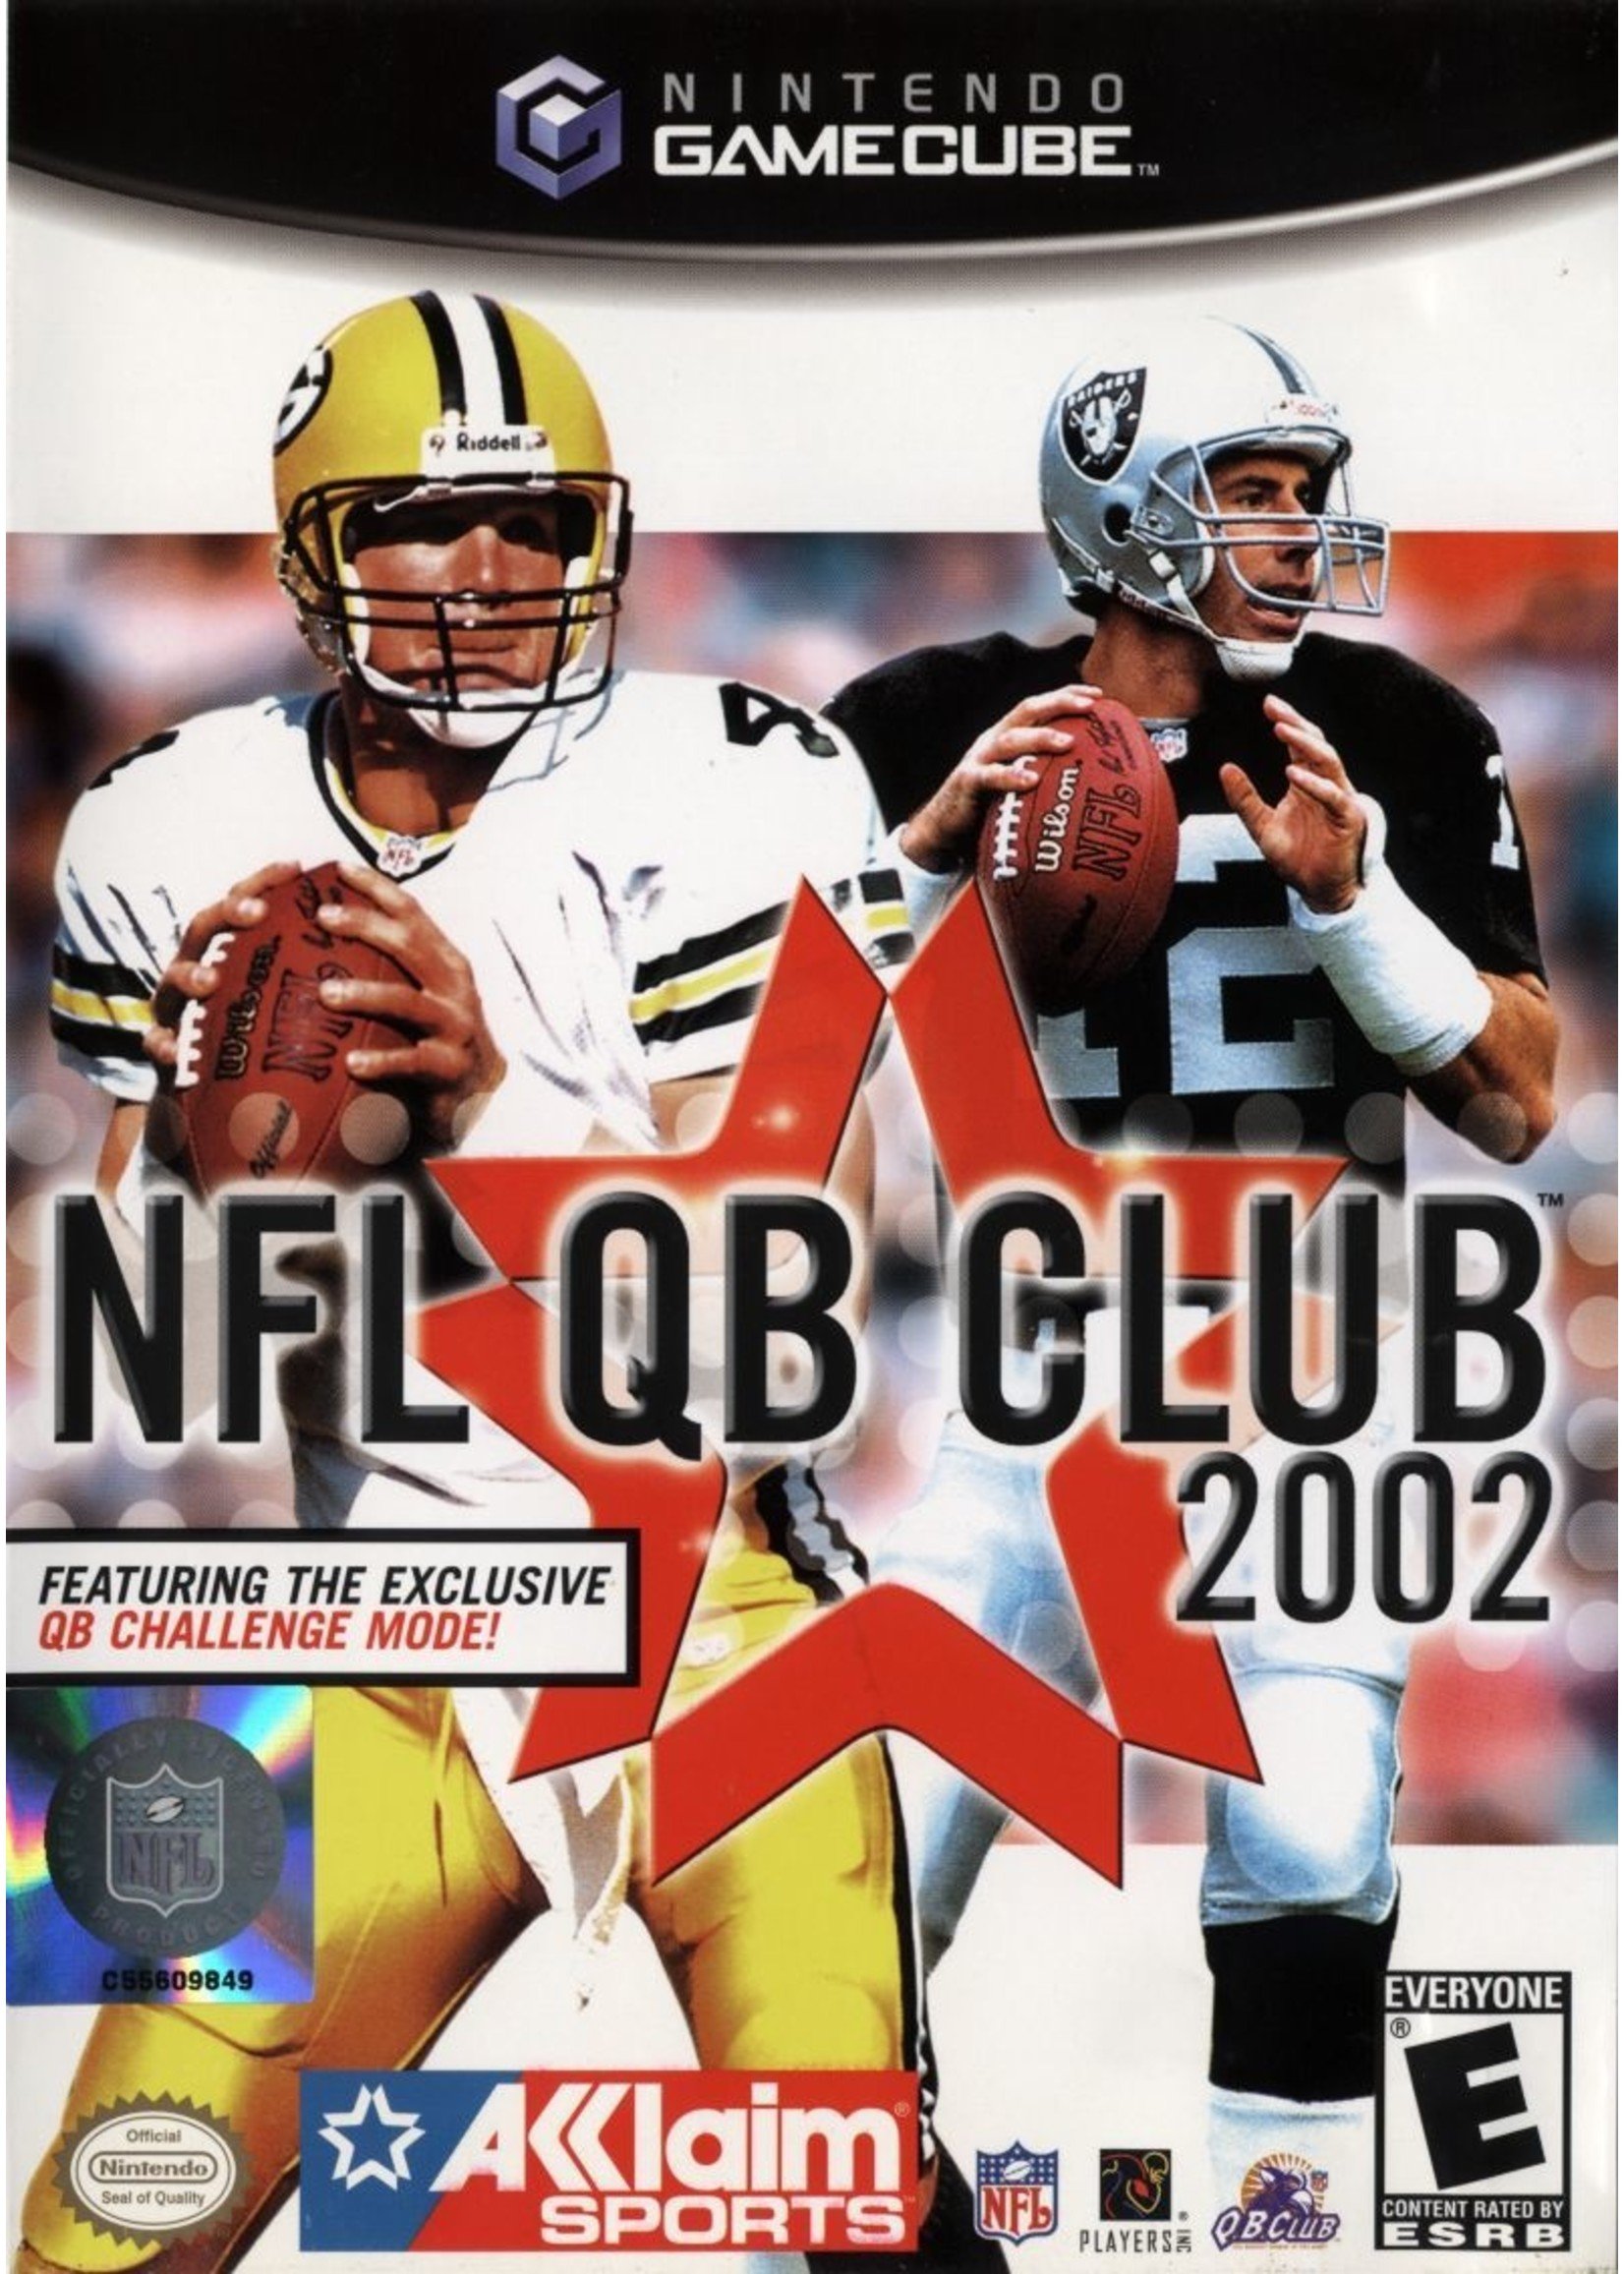 Nintendo Gamecube NFL QB Club 2002